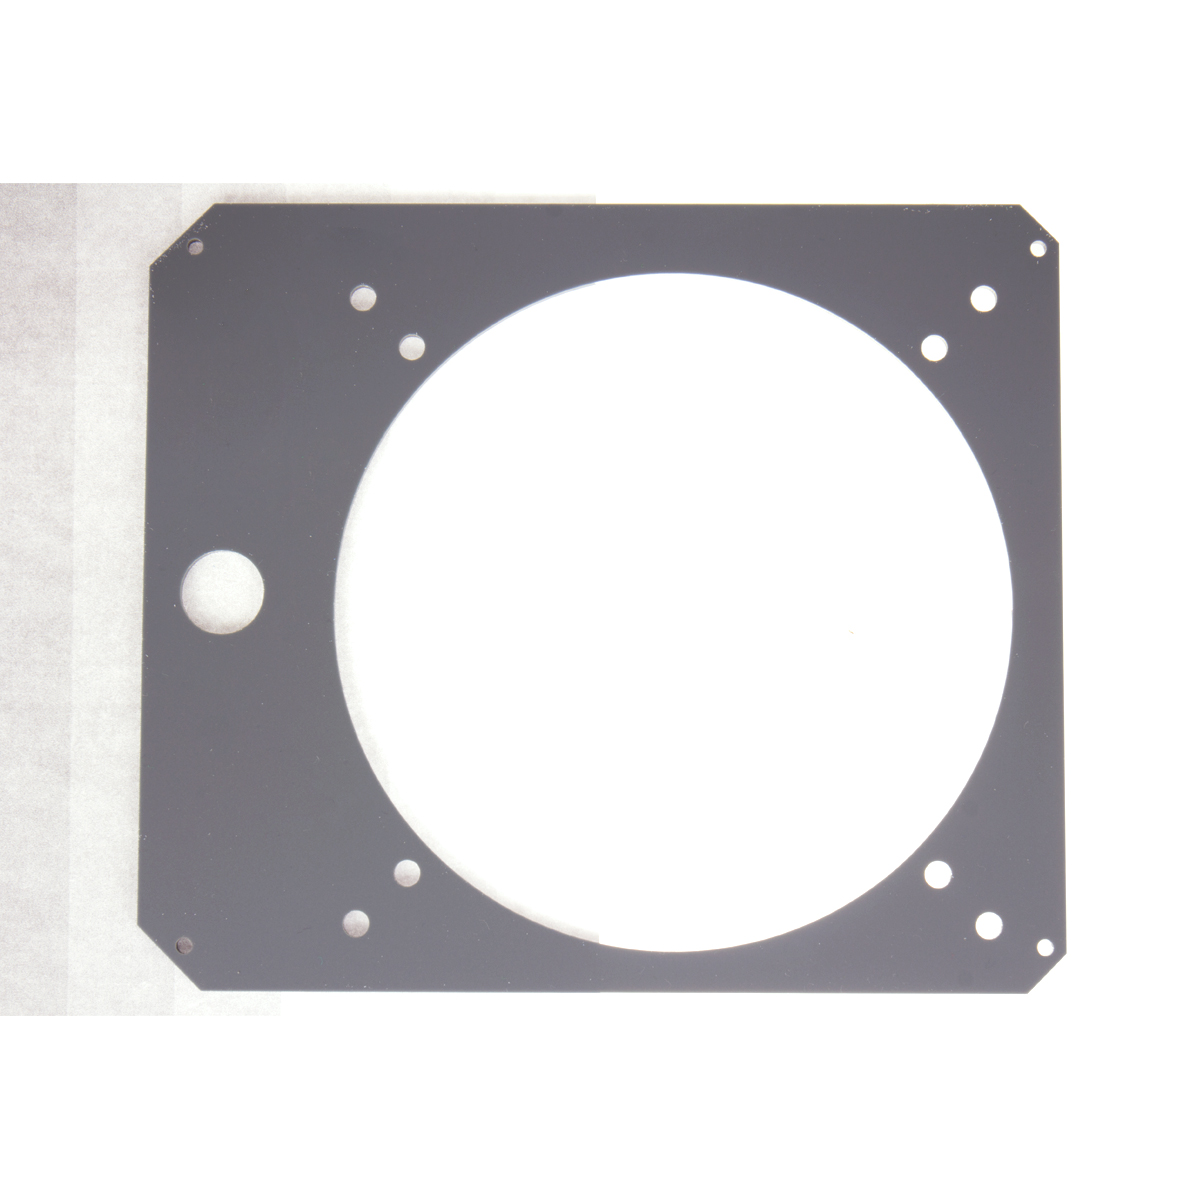 Lazer3D LZ7 Right Panel (16mm Vandal) - Mineral Grey Open